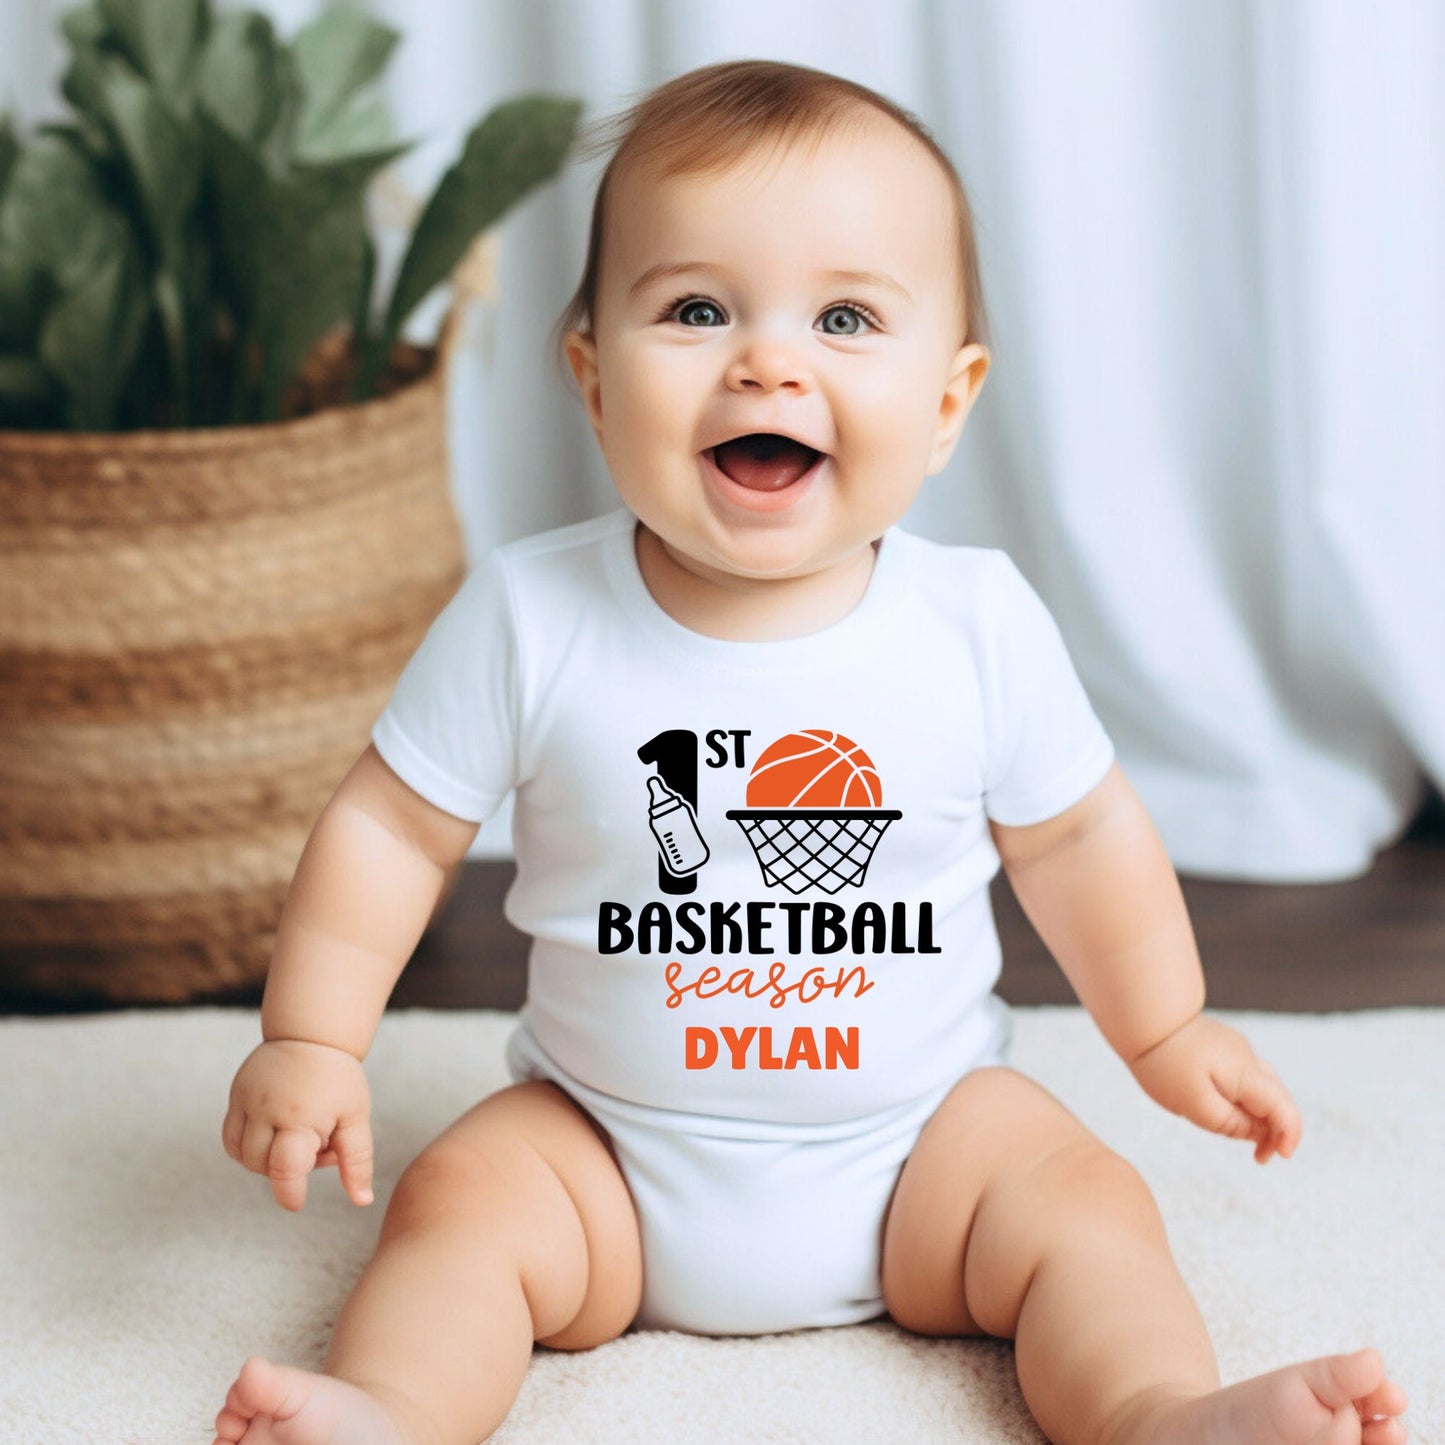 Personalized "1st Basketball Season" Baby Romper